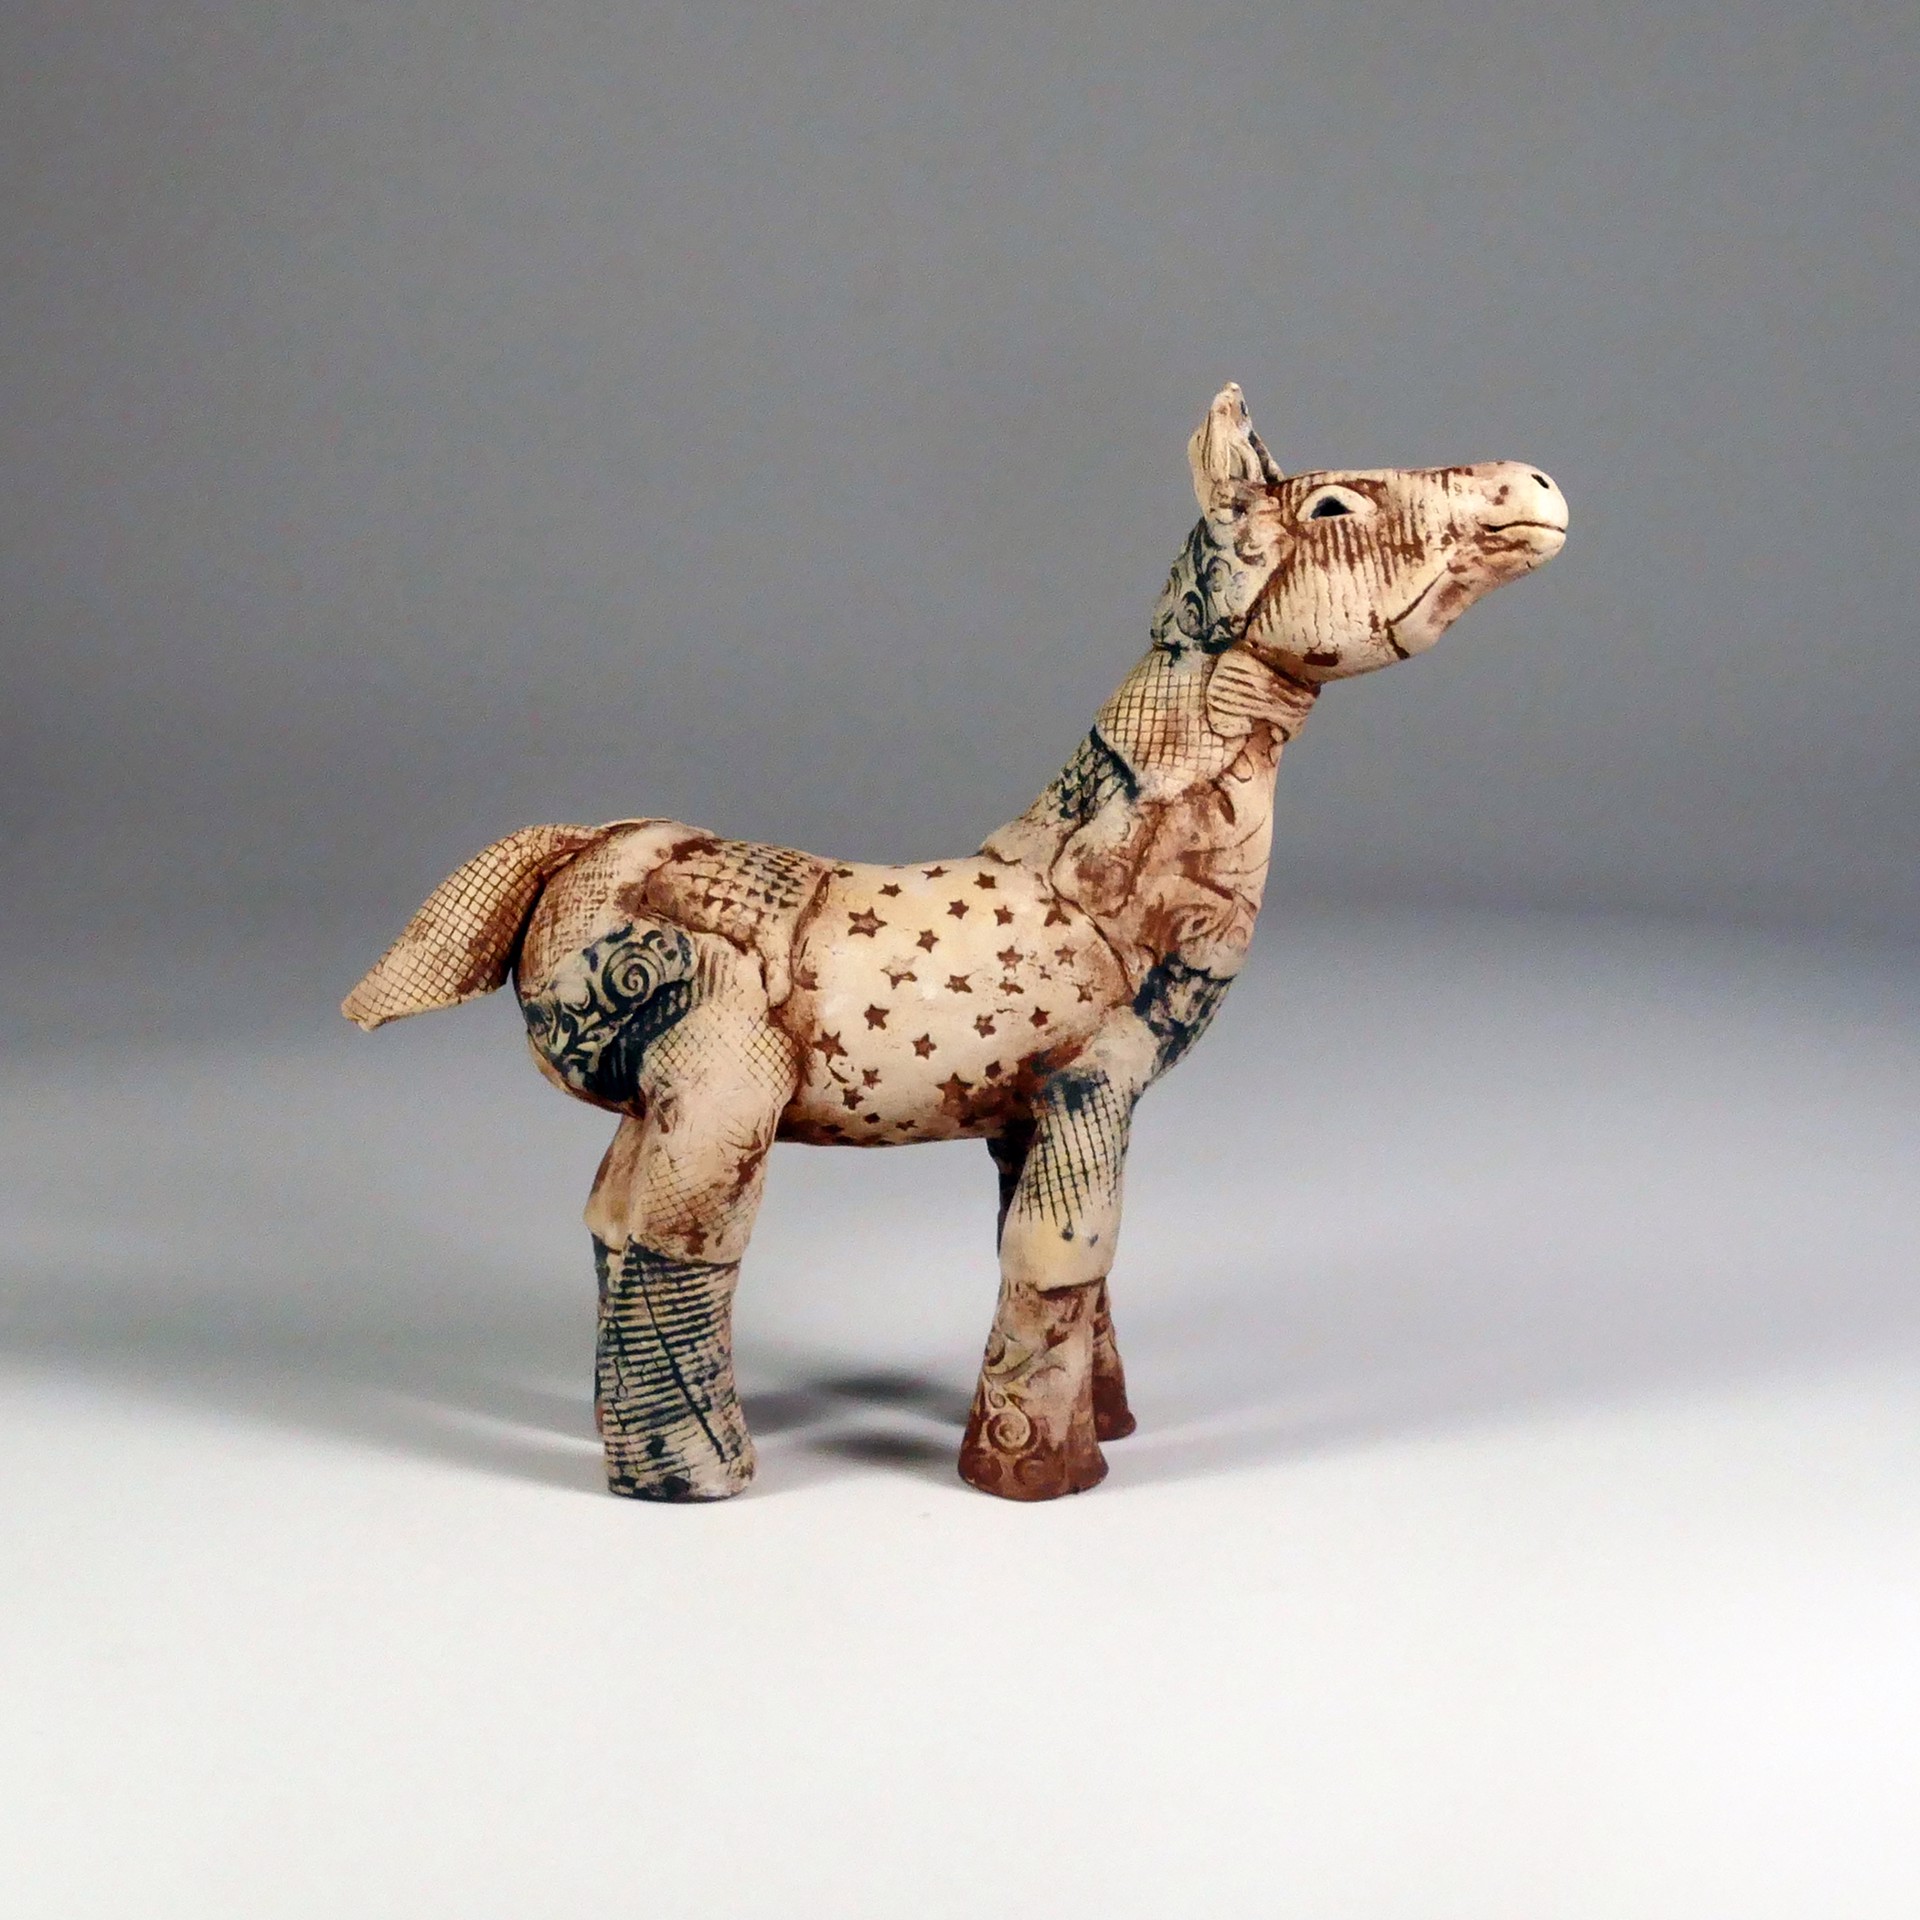 Rusty the Horse by Paula Bellacera